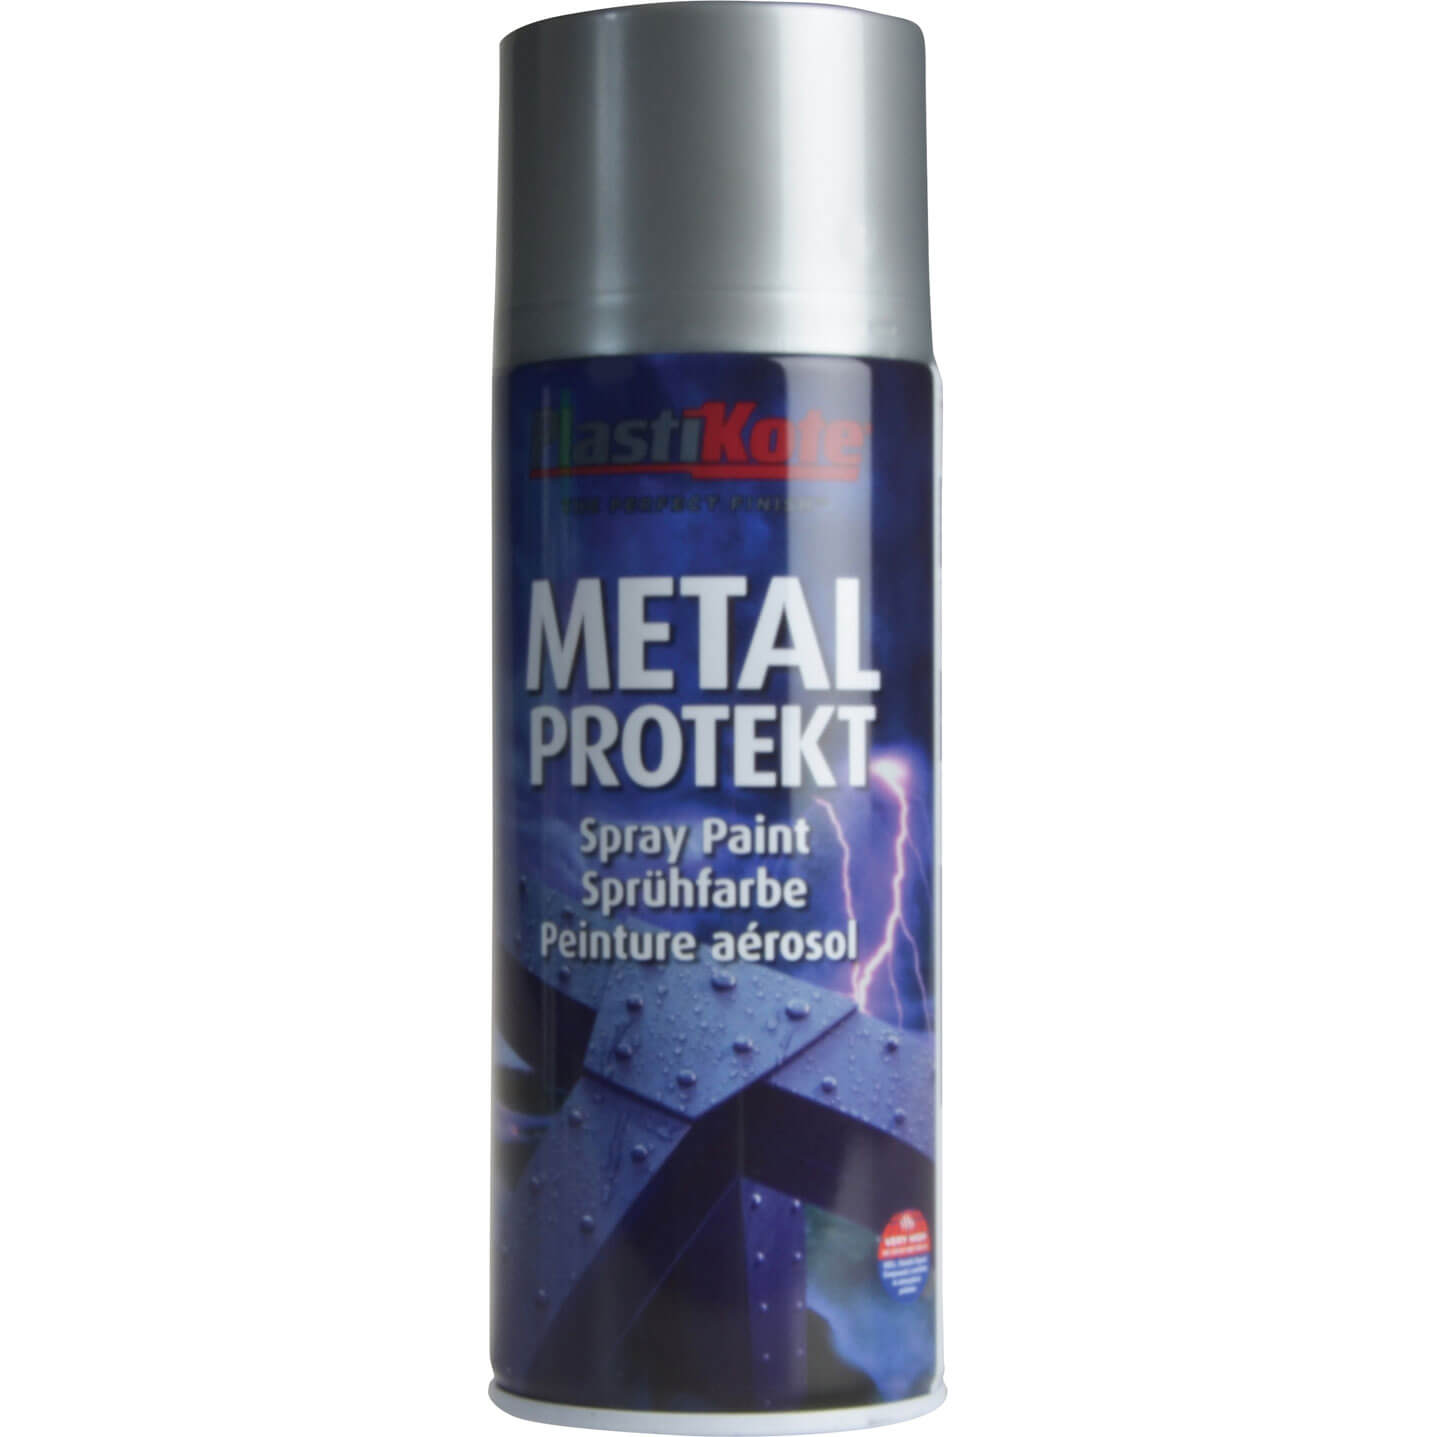 Image of Plastikote Metal Protekt Aerosol Spray Paint Aluminium 400ml